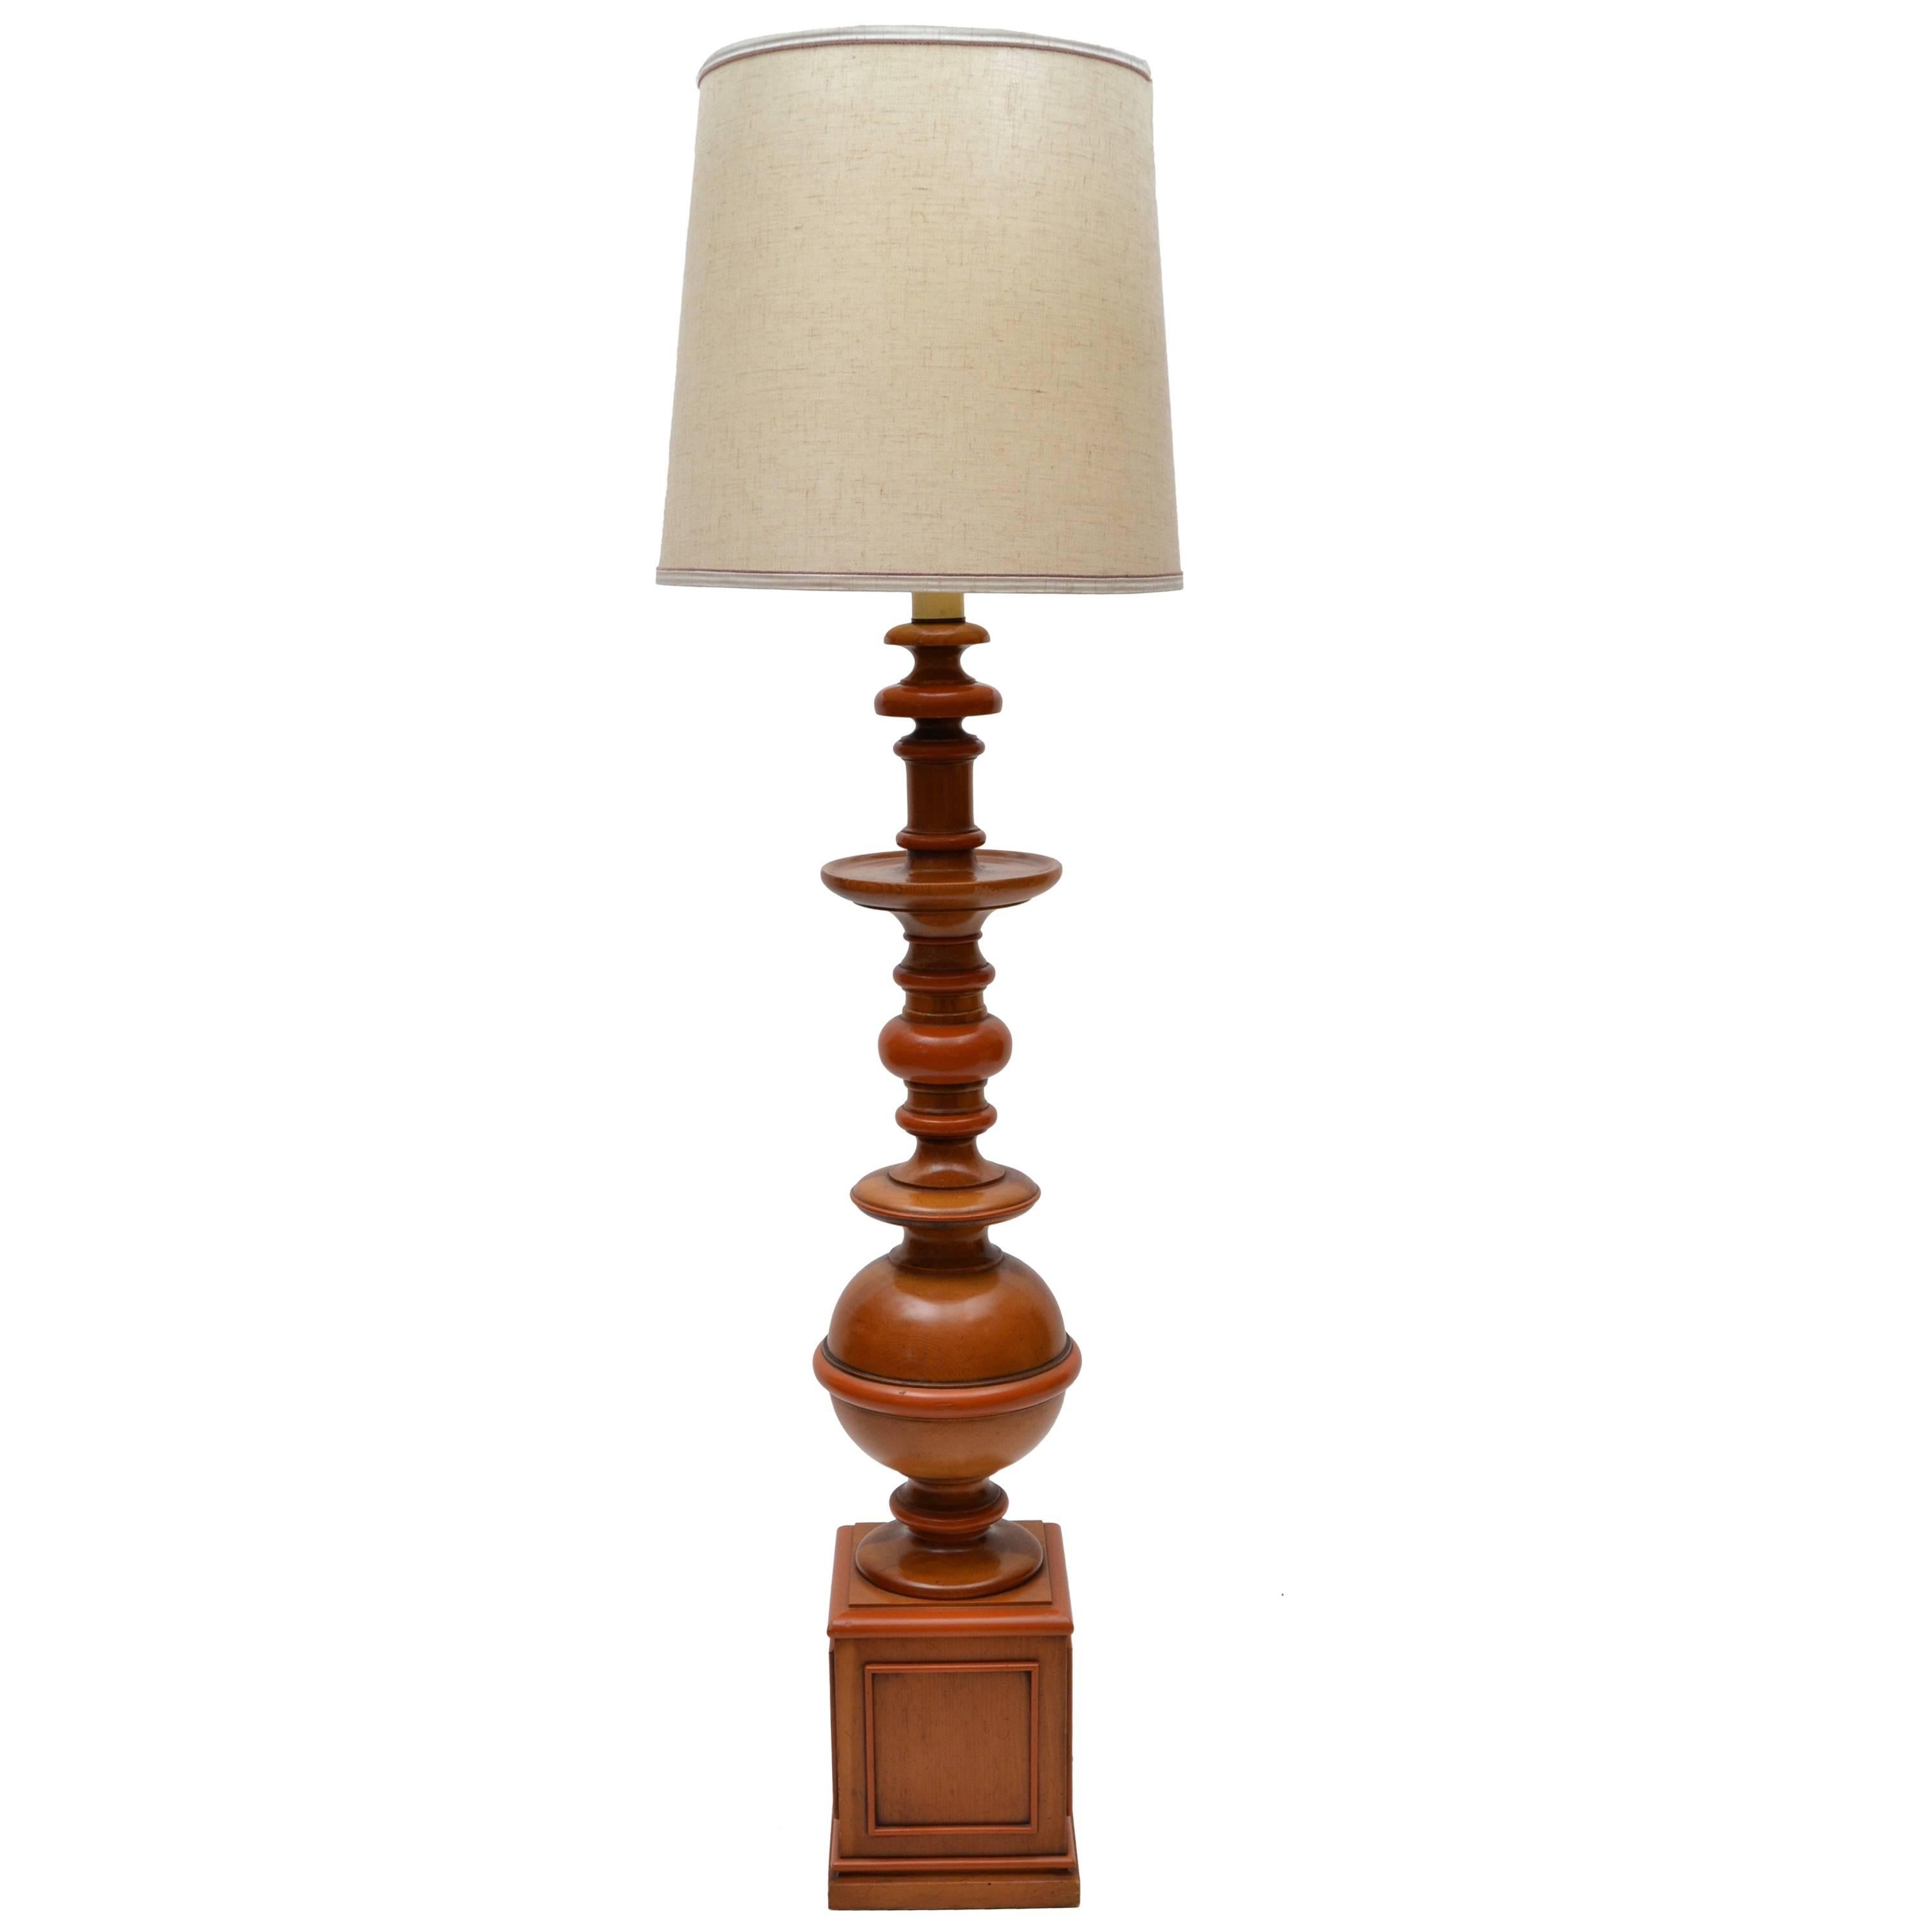 Mid-20th Century Regency Turned Wooden Knob Creek of Morganton Floor Lamp Shade For Sale